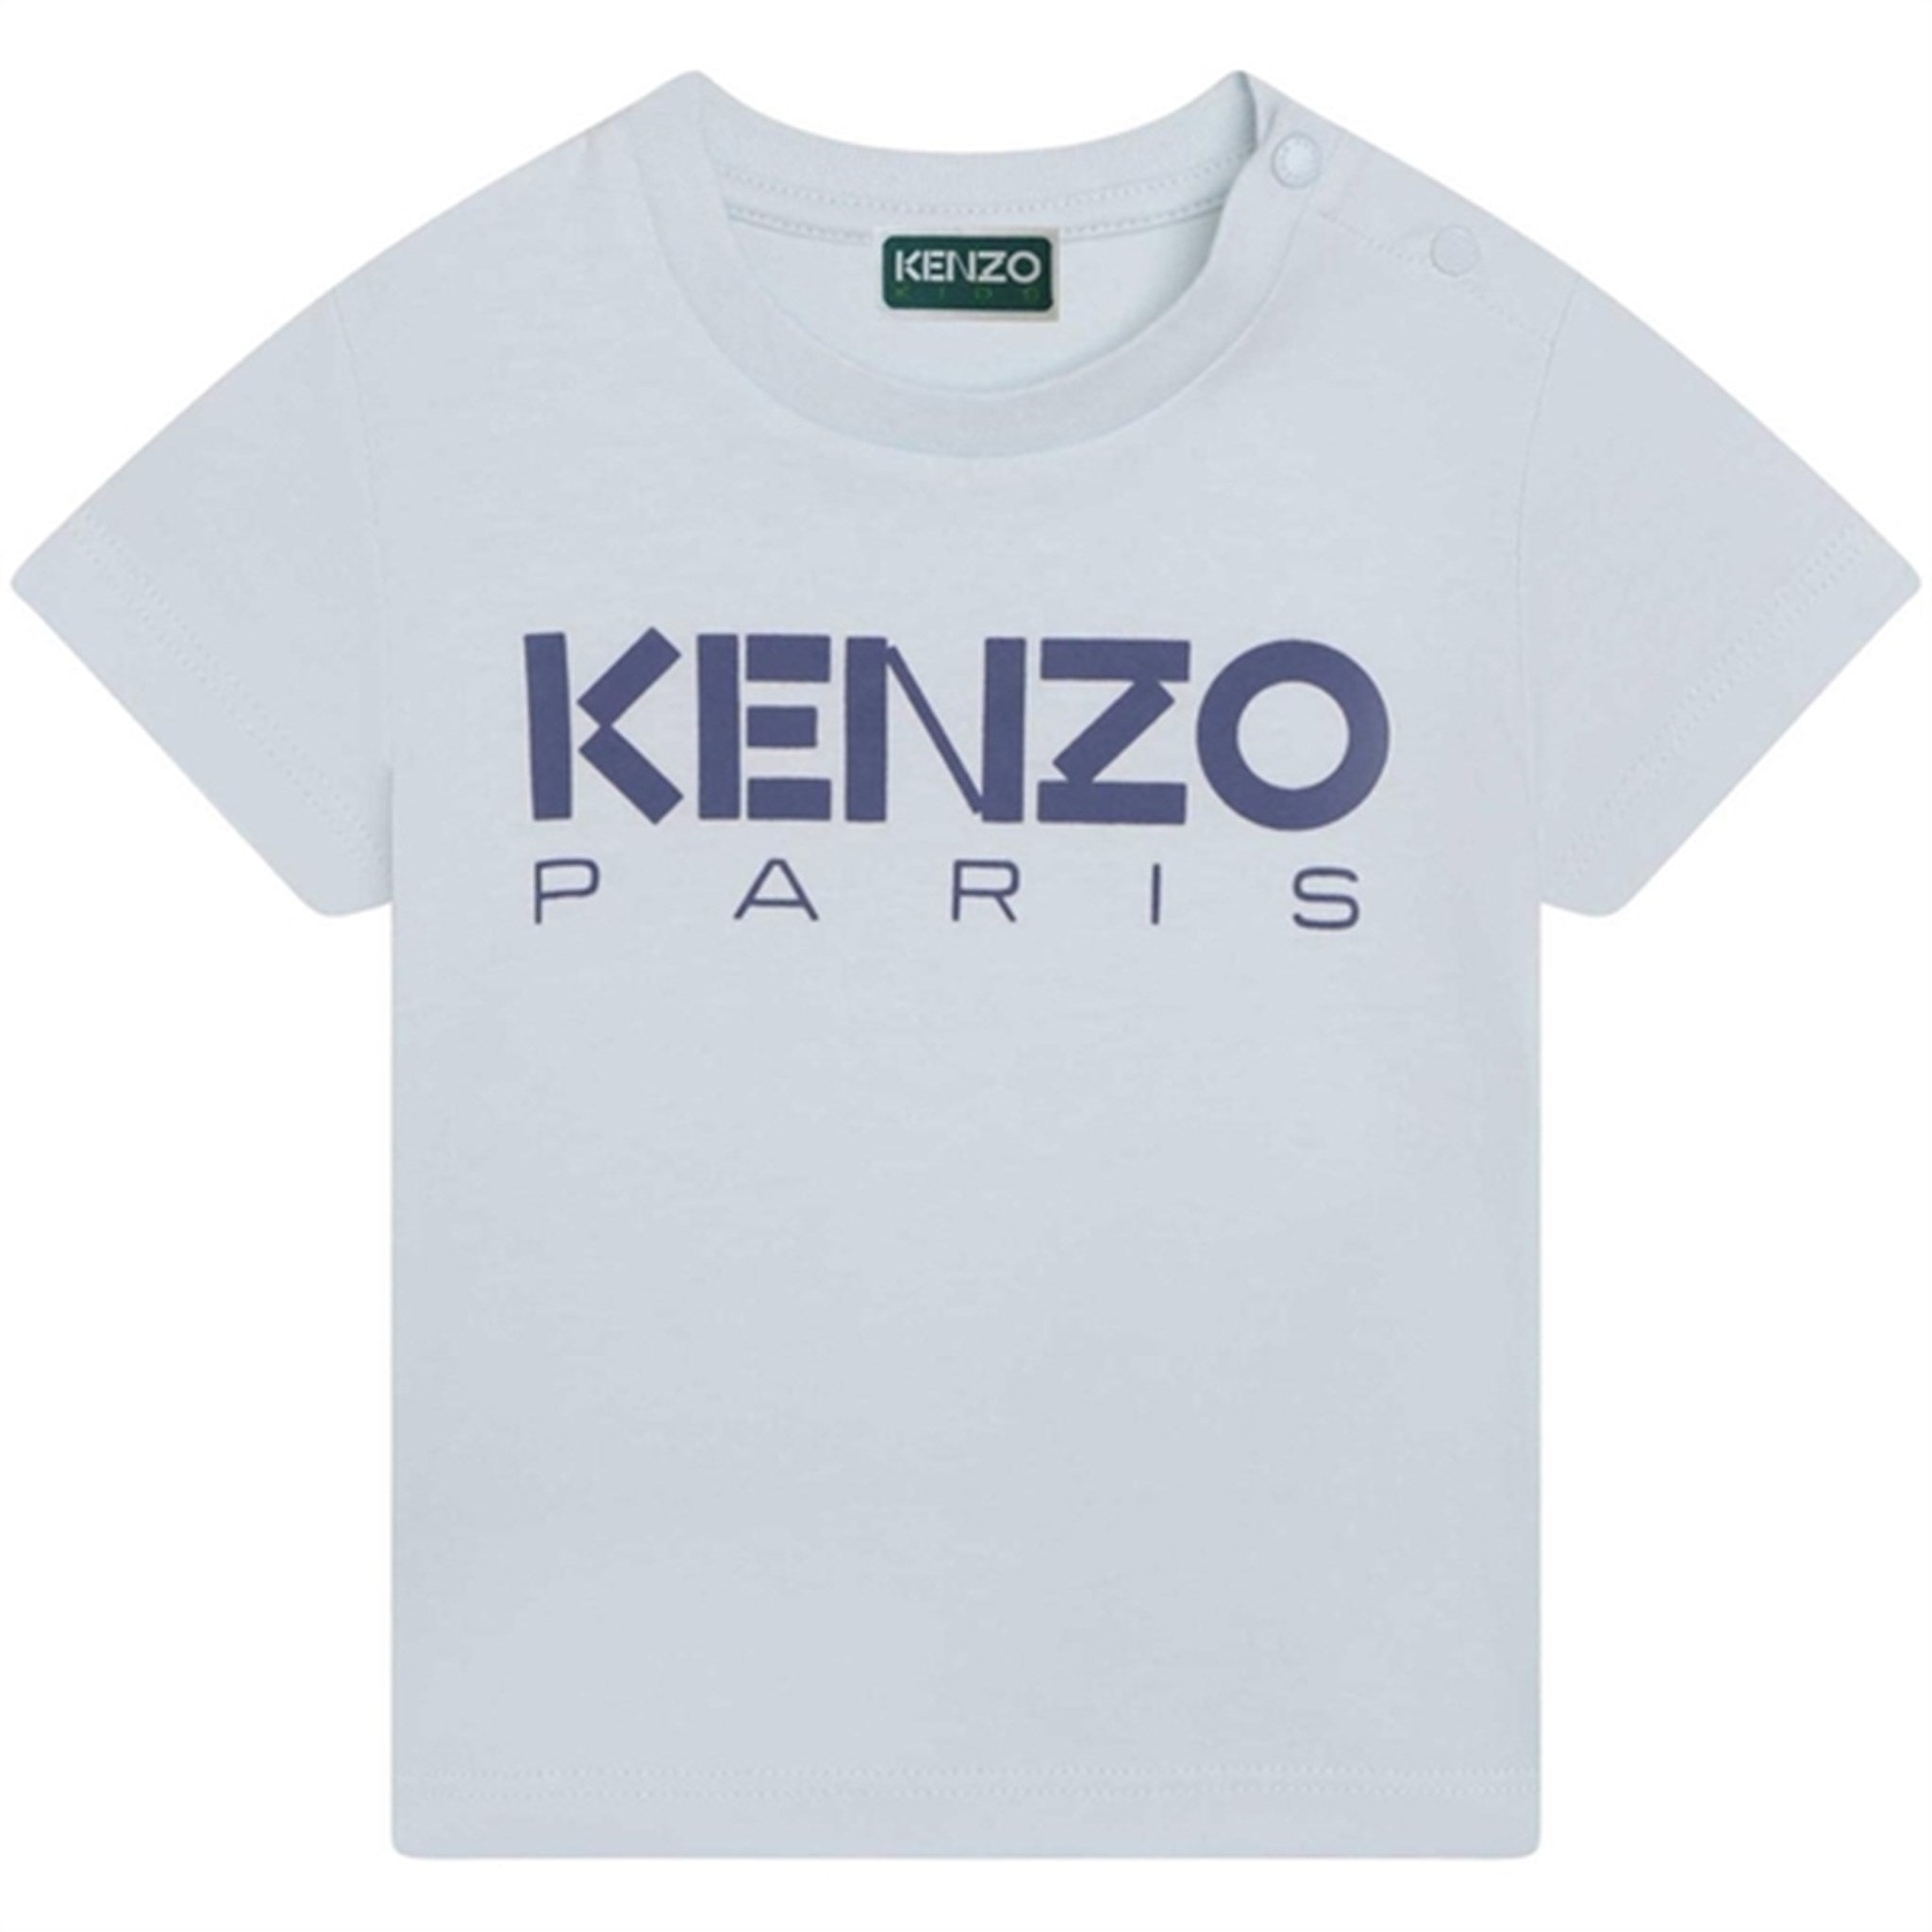 Kenzo Baby T-shirt Pale Blue